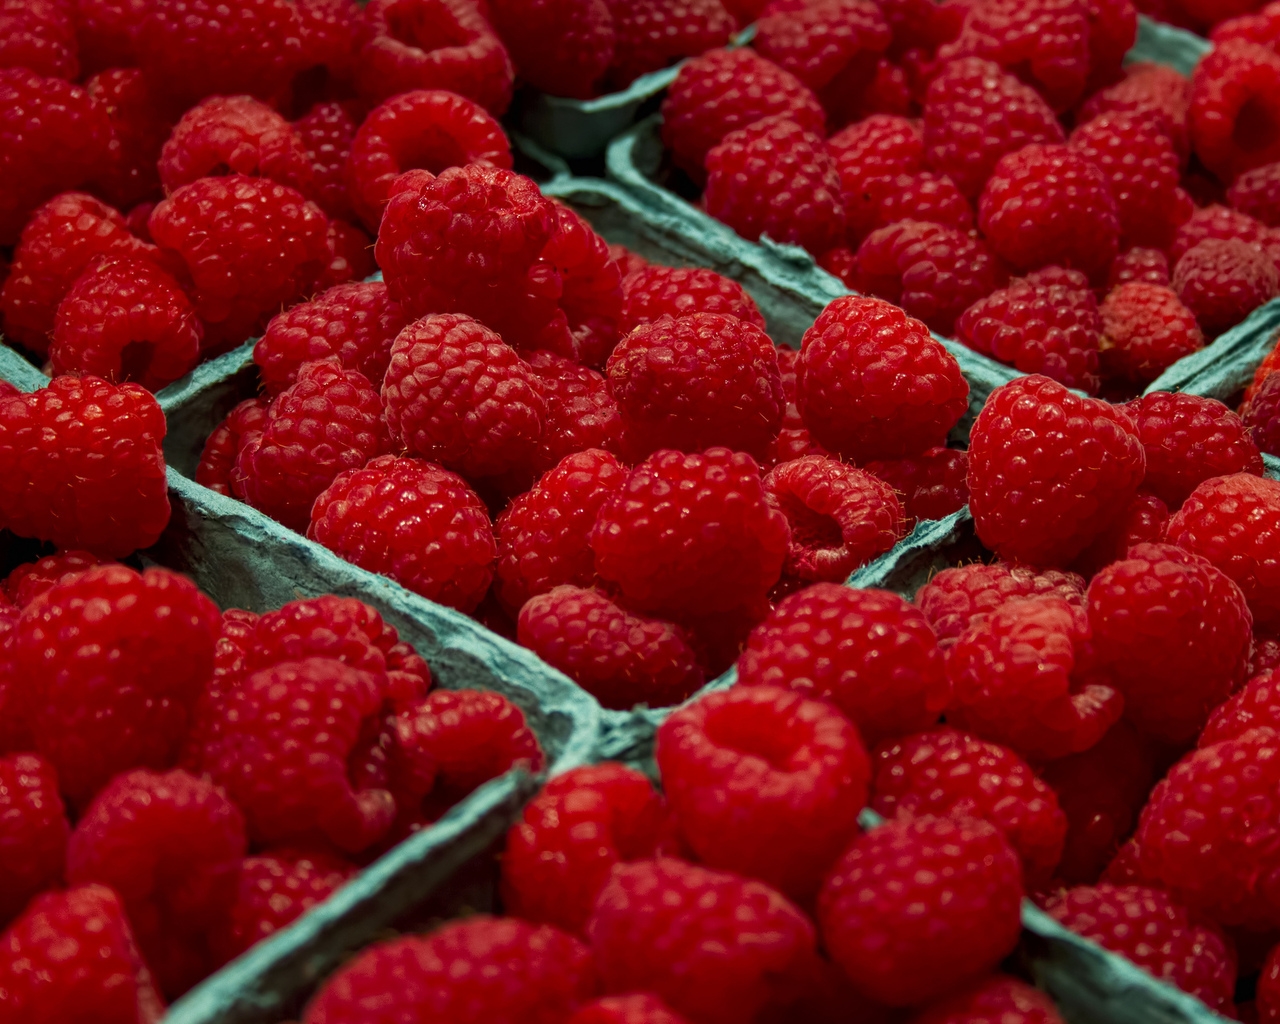 Raspberries  for 1280 x 1024 resolution